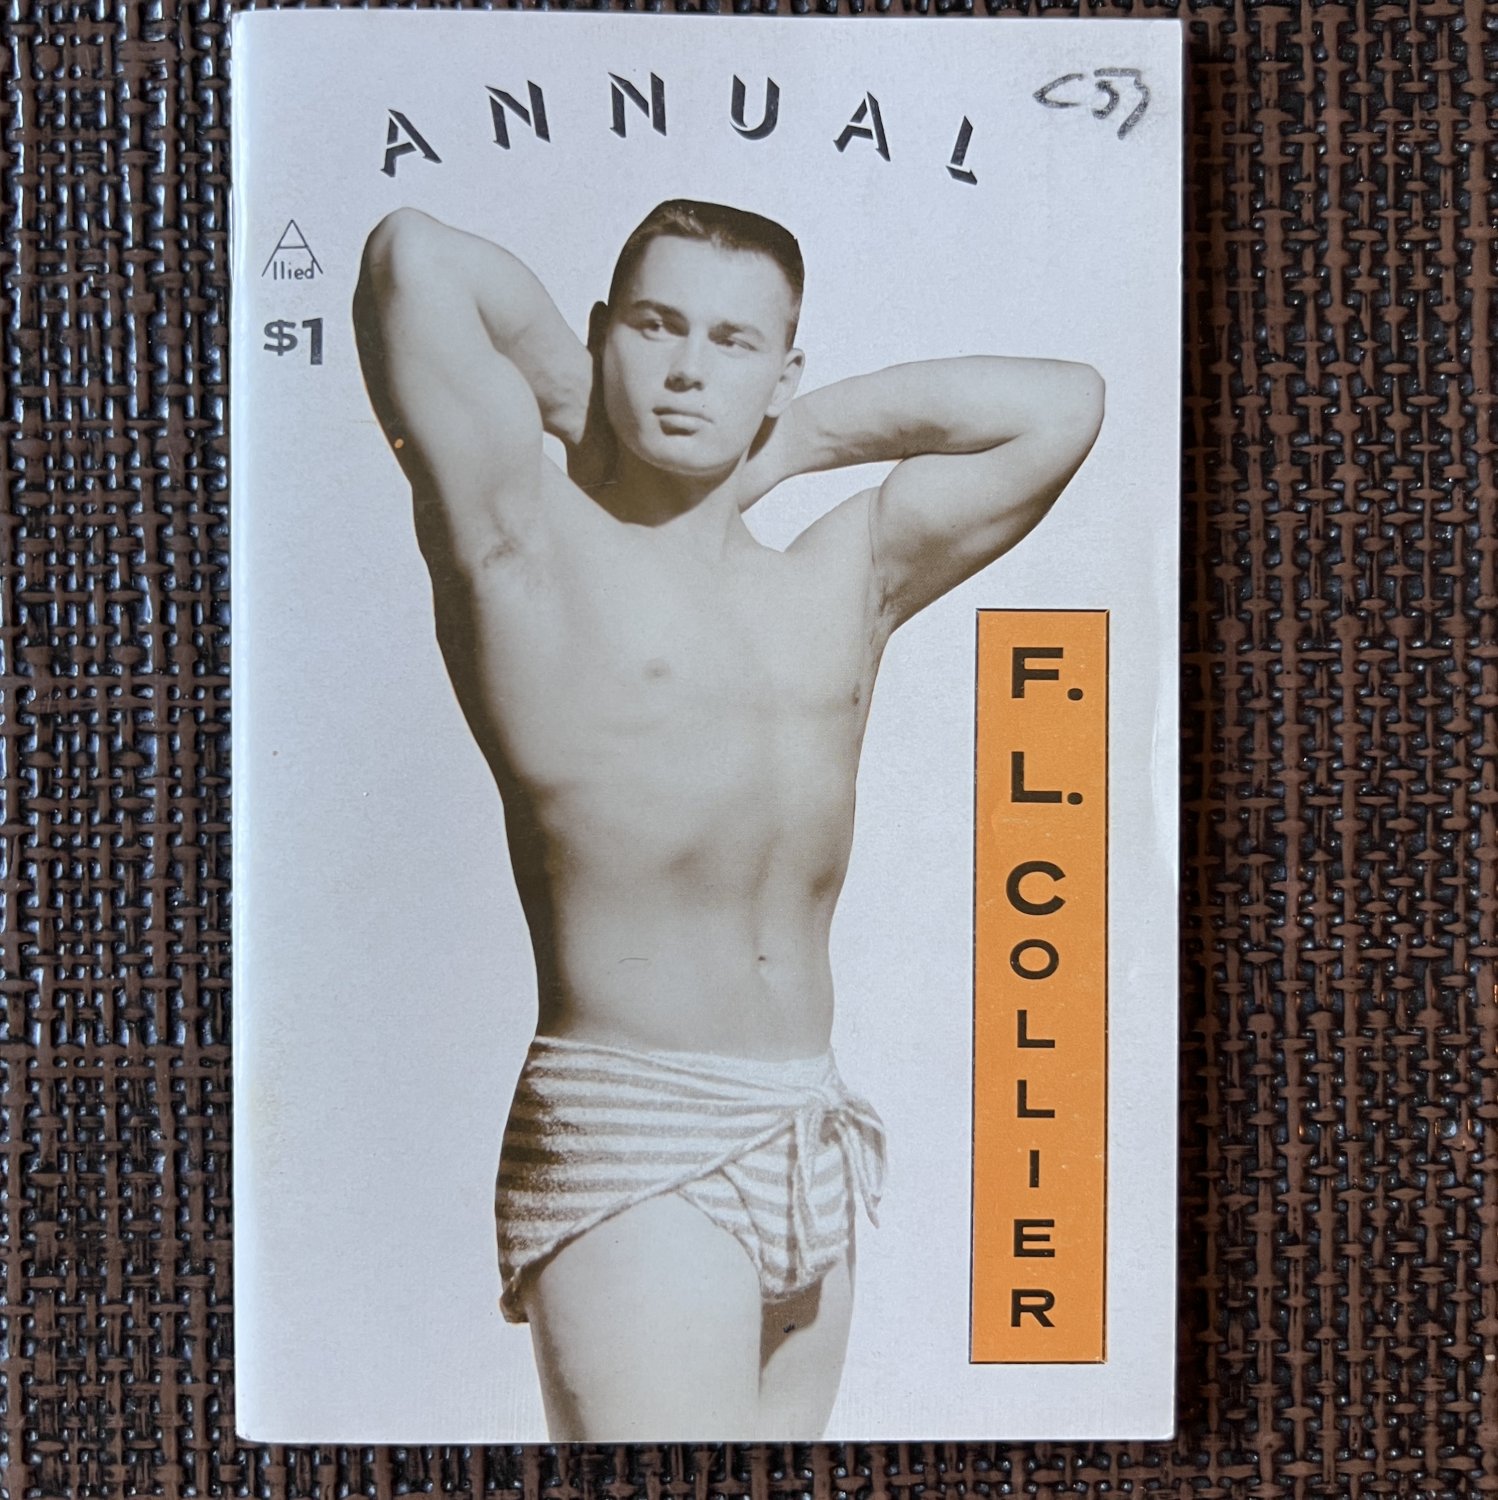 GRECIAN GUILD STUDIO Quarterly #1 (1961) F. L. COLLIER Vintage Male Beefcake Posing Strap Physique